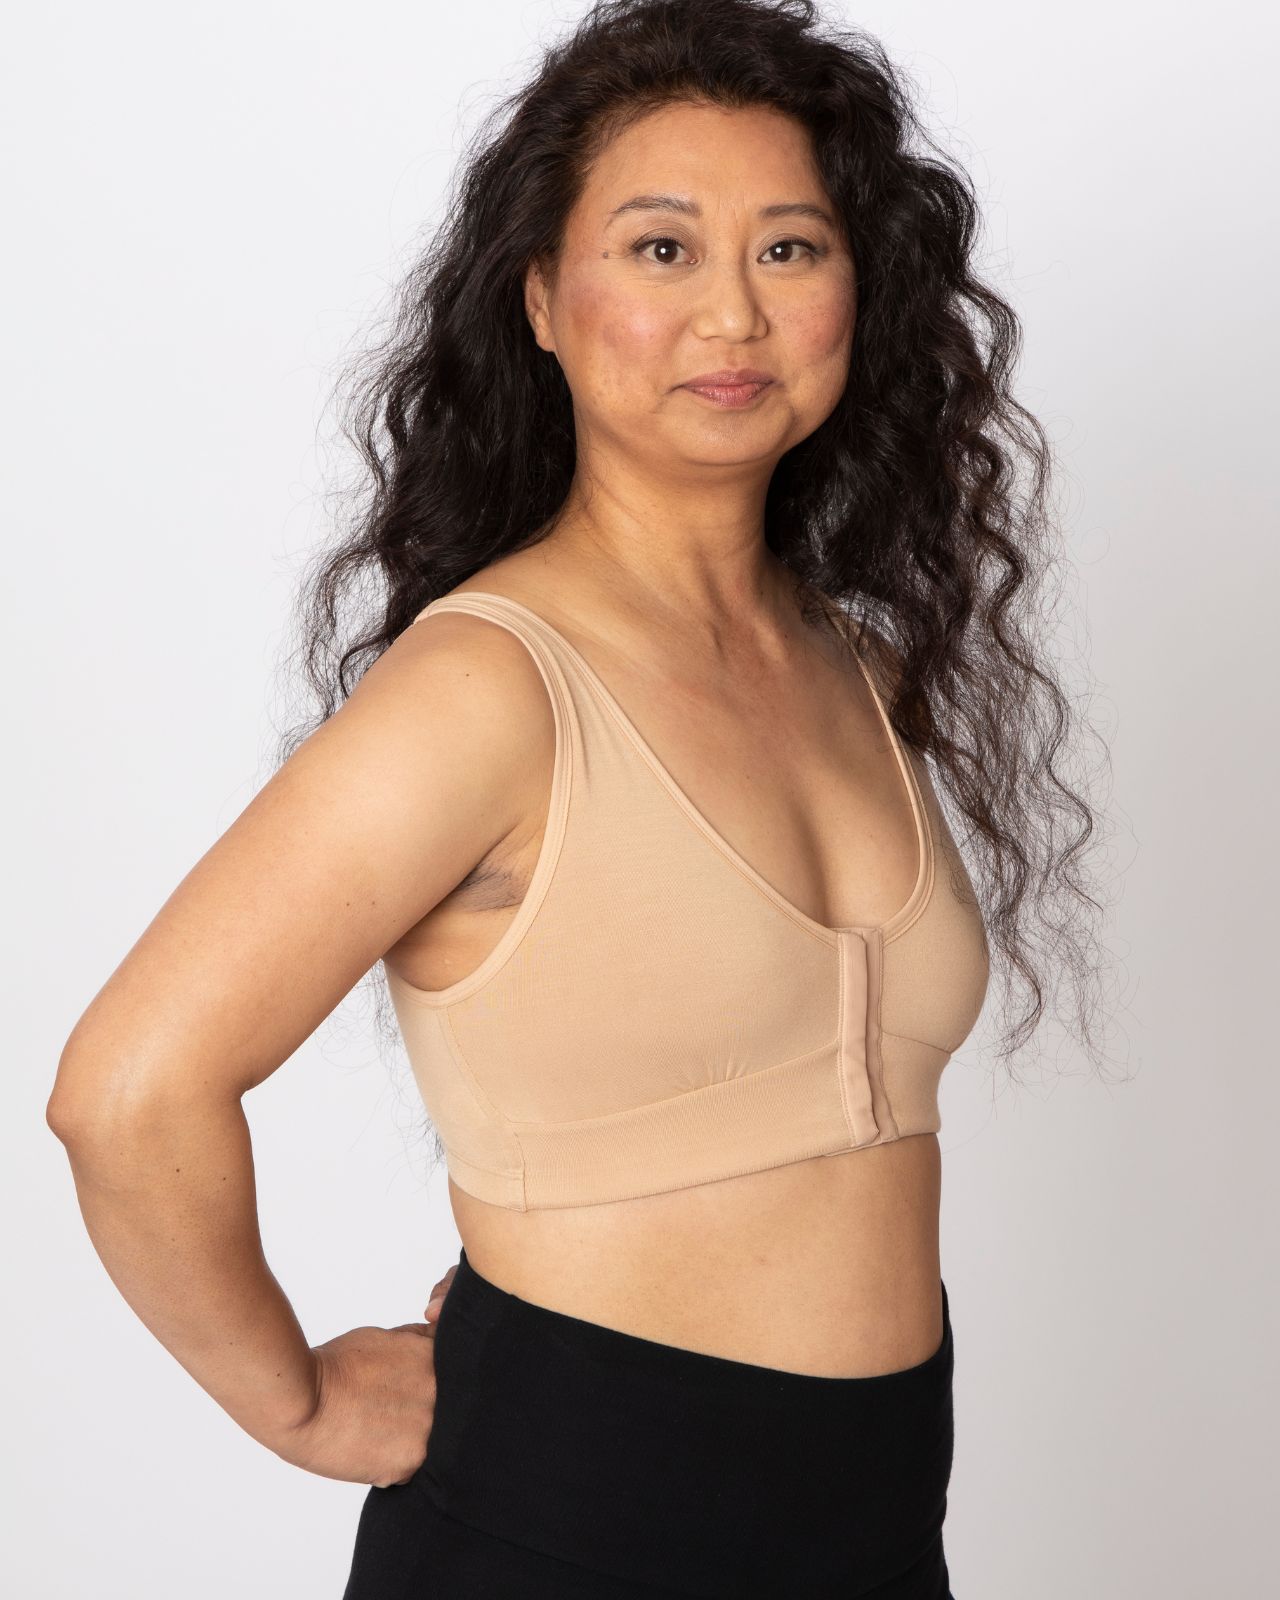 Asian woman wearing a tan bra